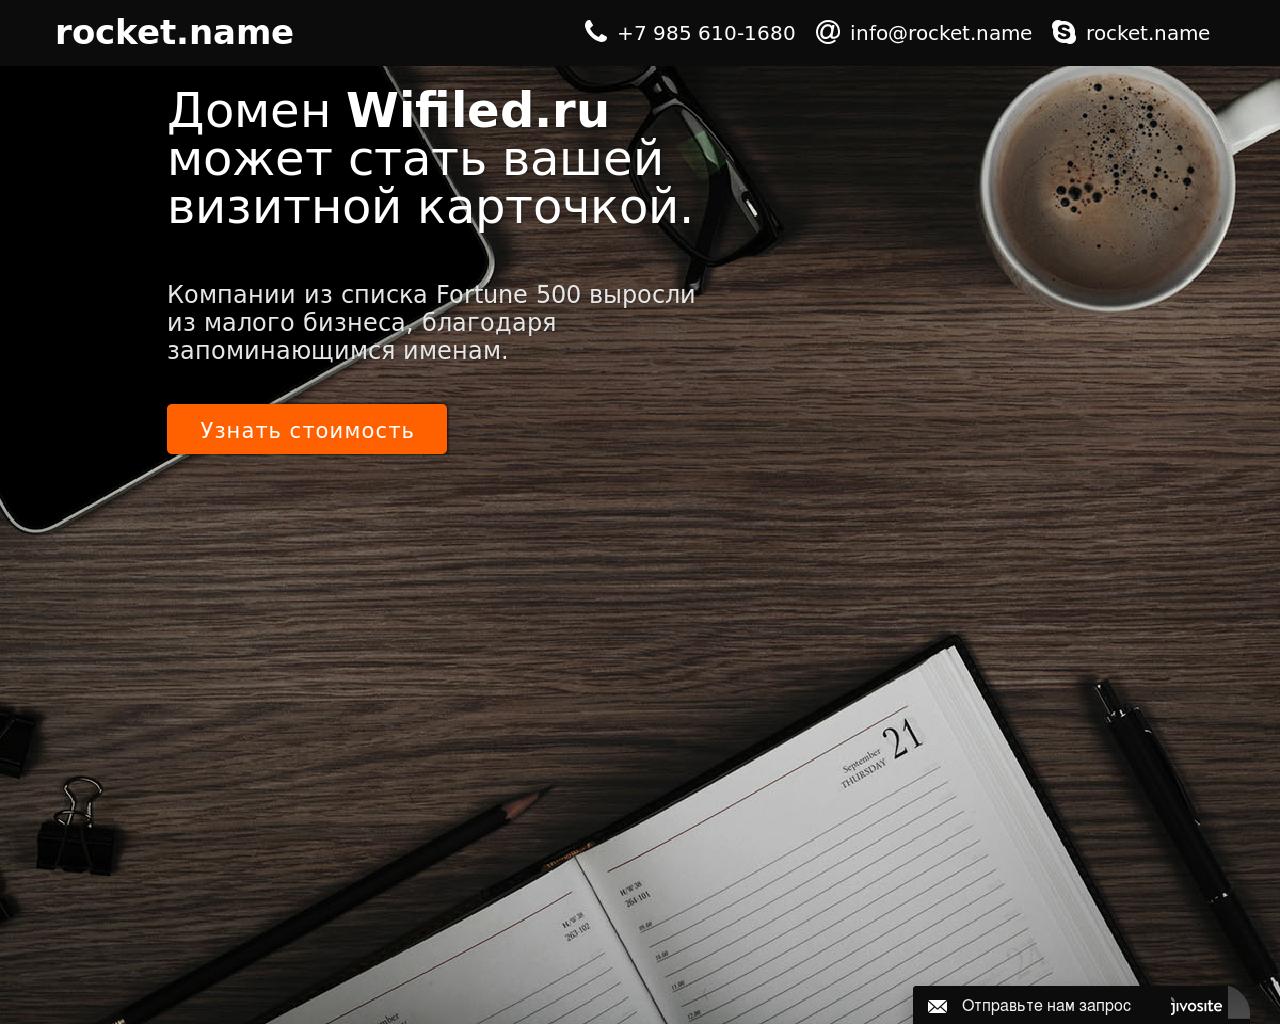 Изображение сайта wifiled.ru в разрешении 1280x1024